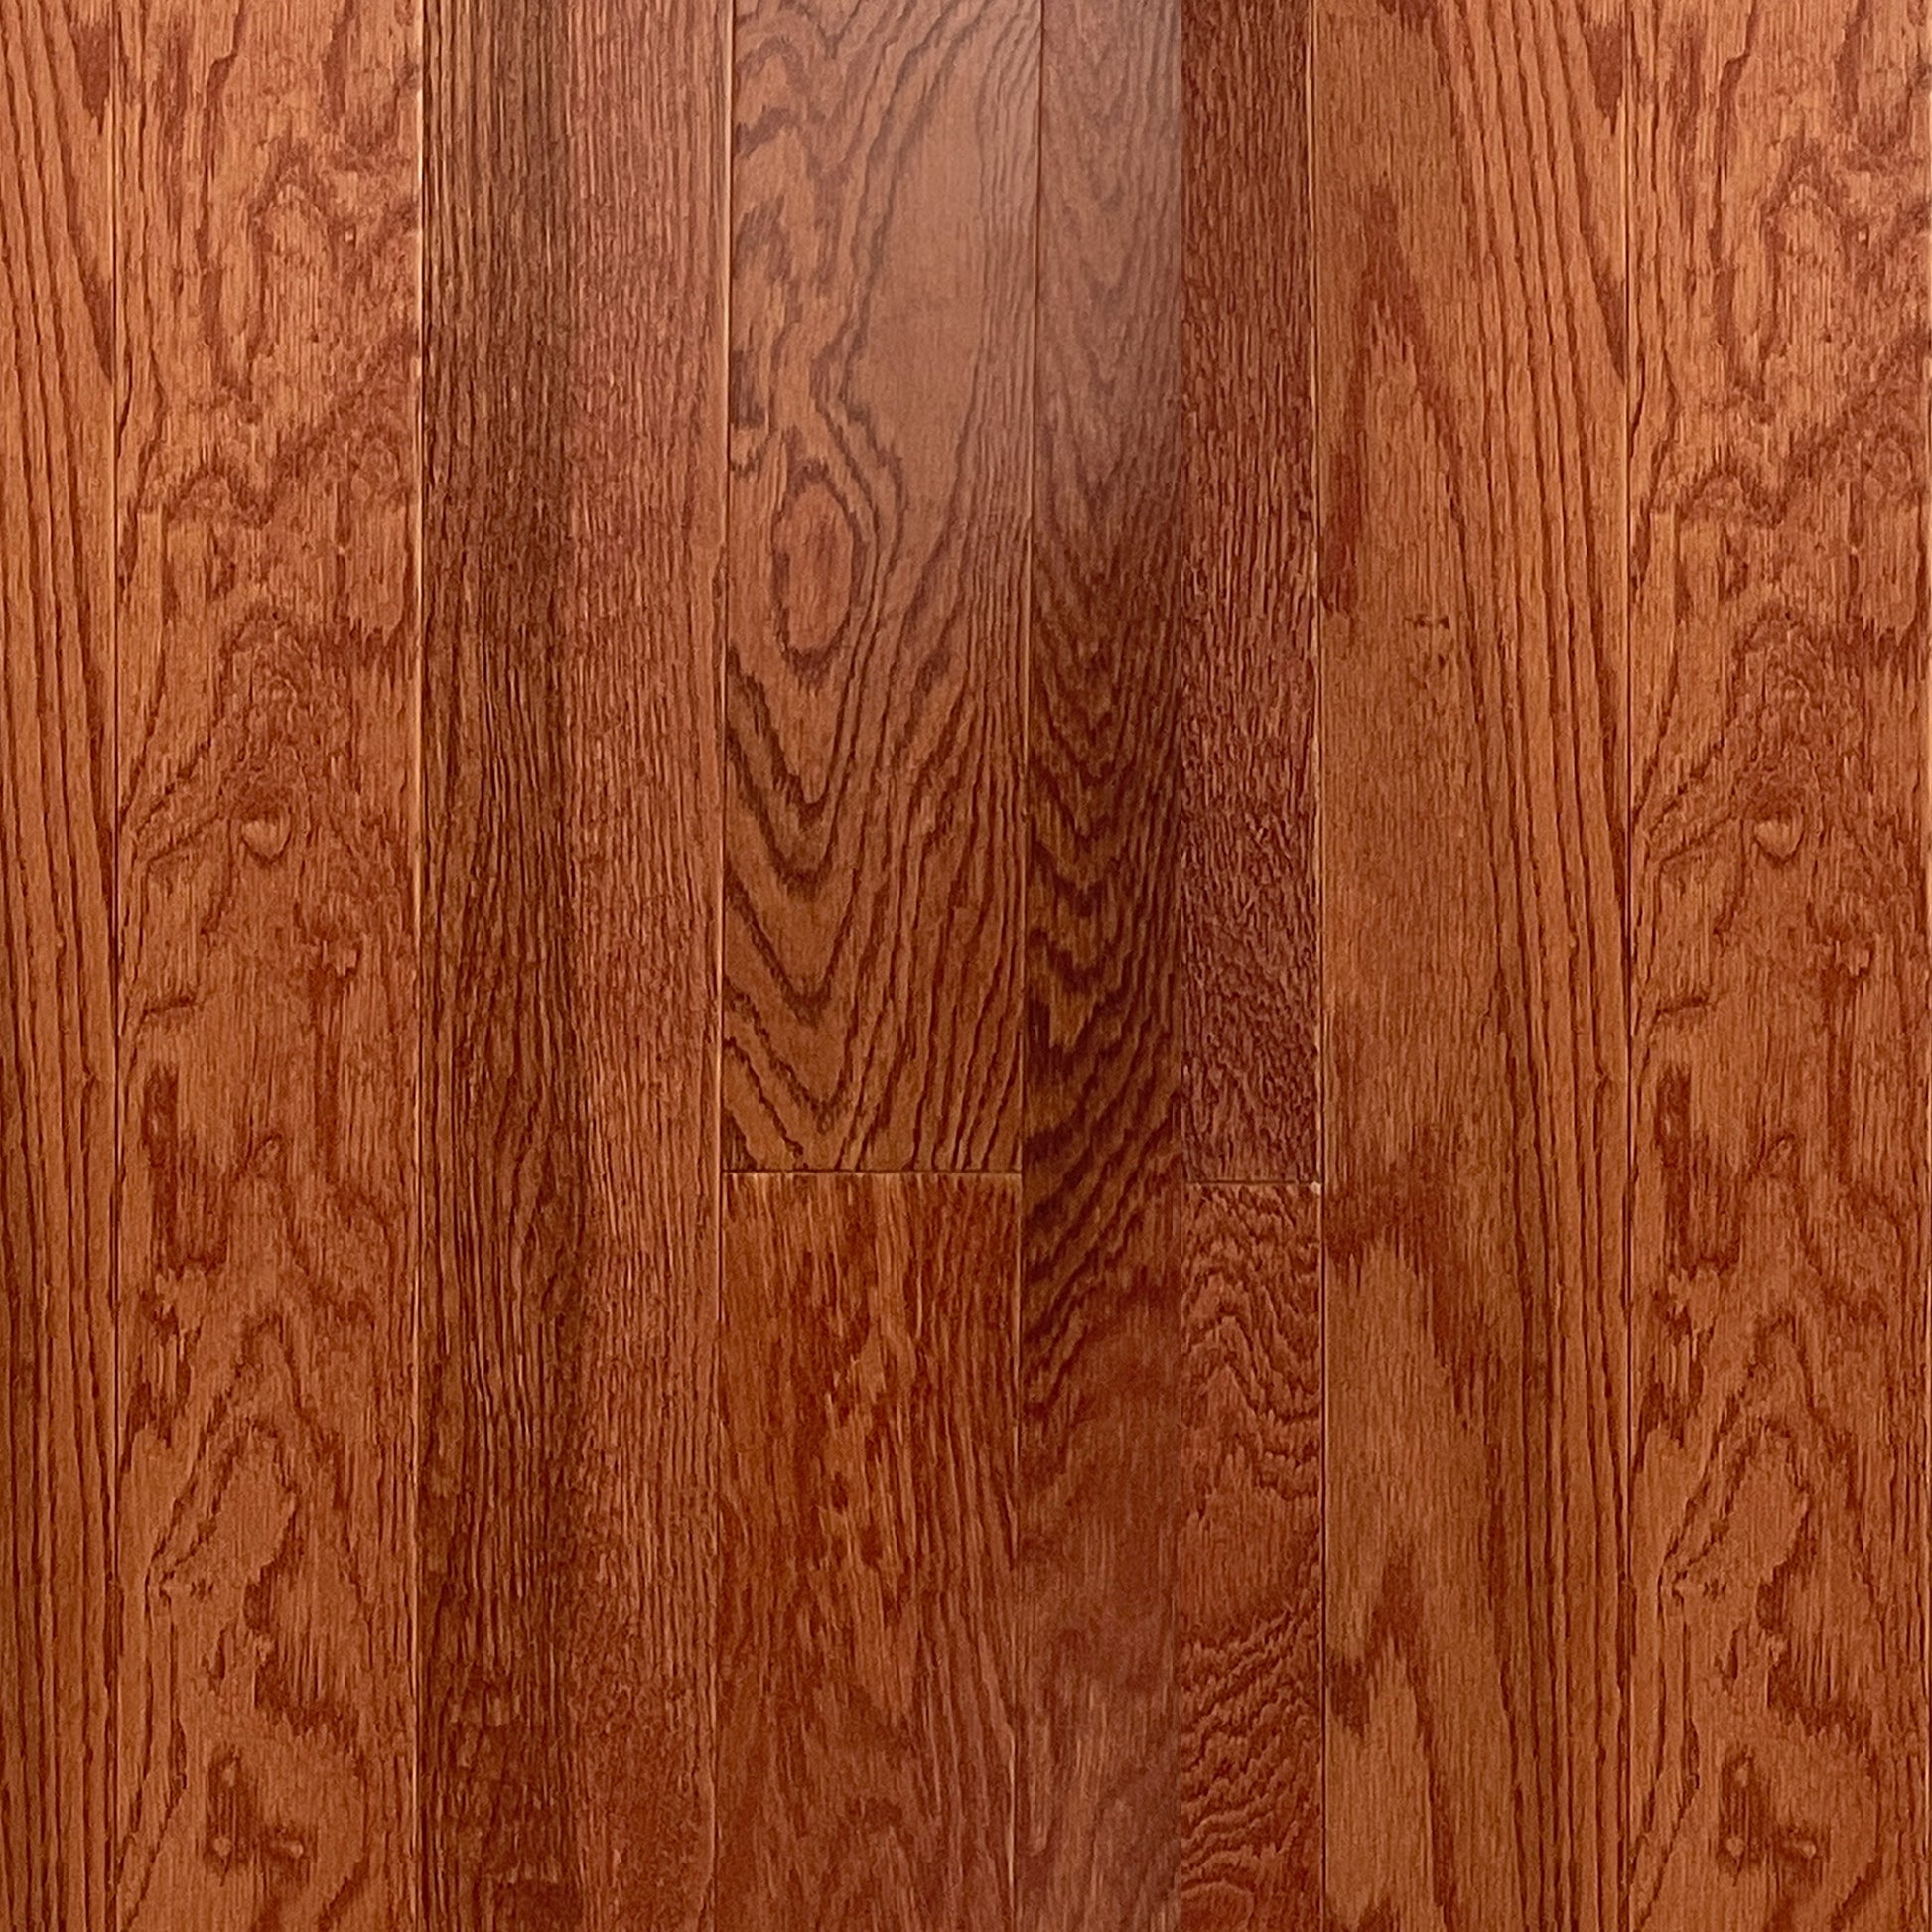 EF-Gunstock Engineered Timber Flooring by KLD Home